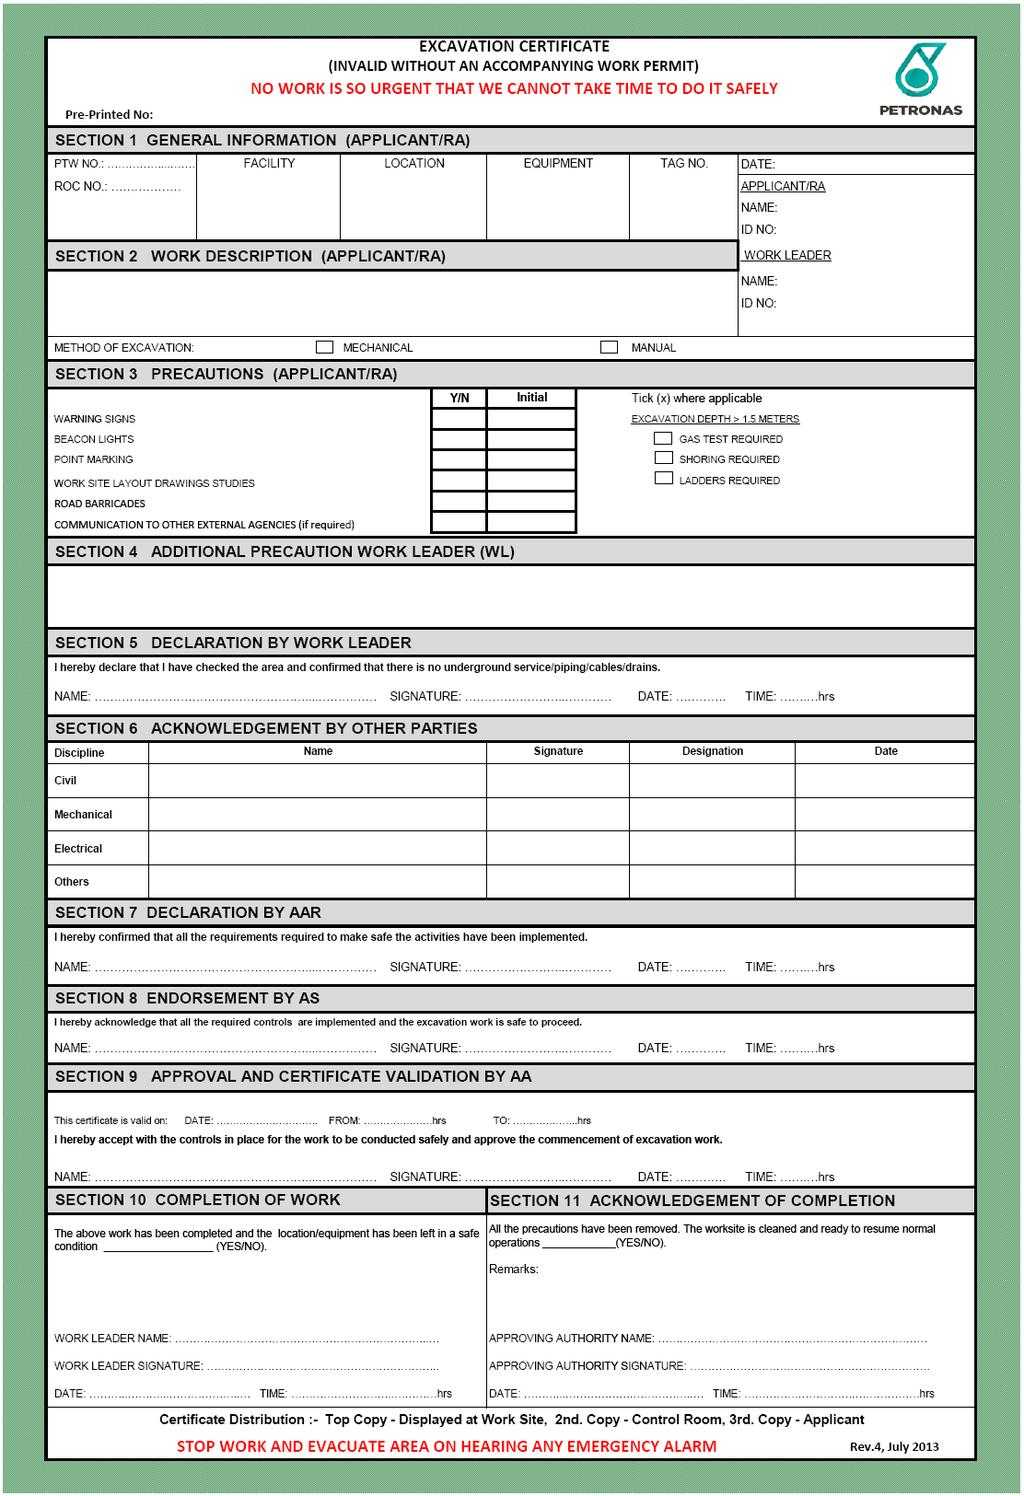 Petronas Carigali Permit To Work Procedure Petronas Carigali In Electrical Isolation Certificate Template